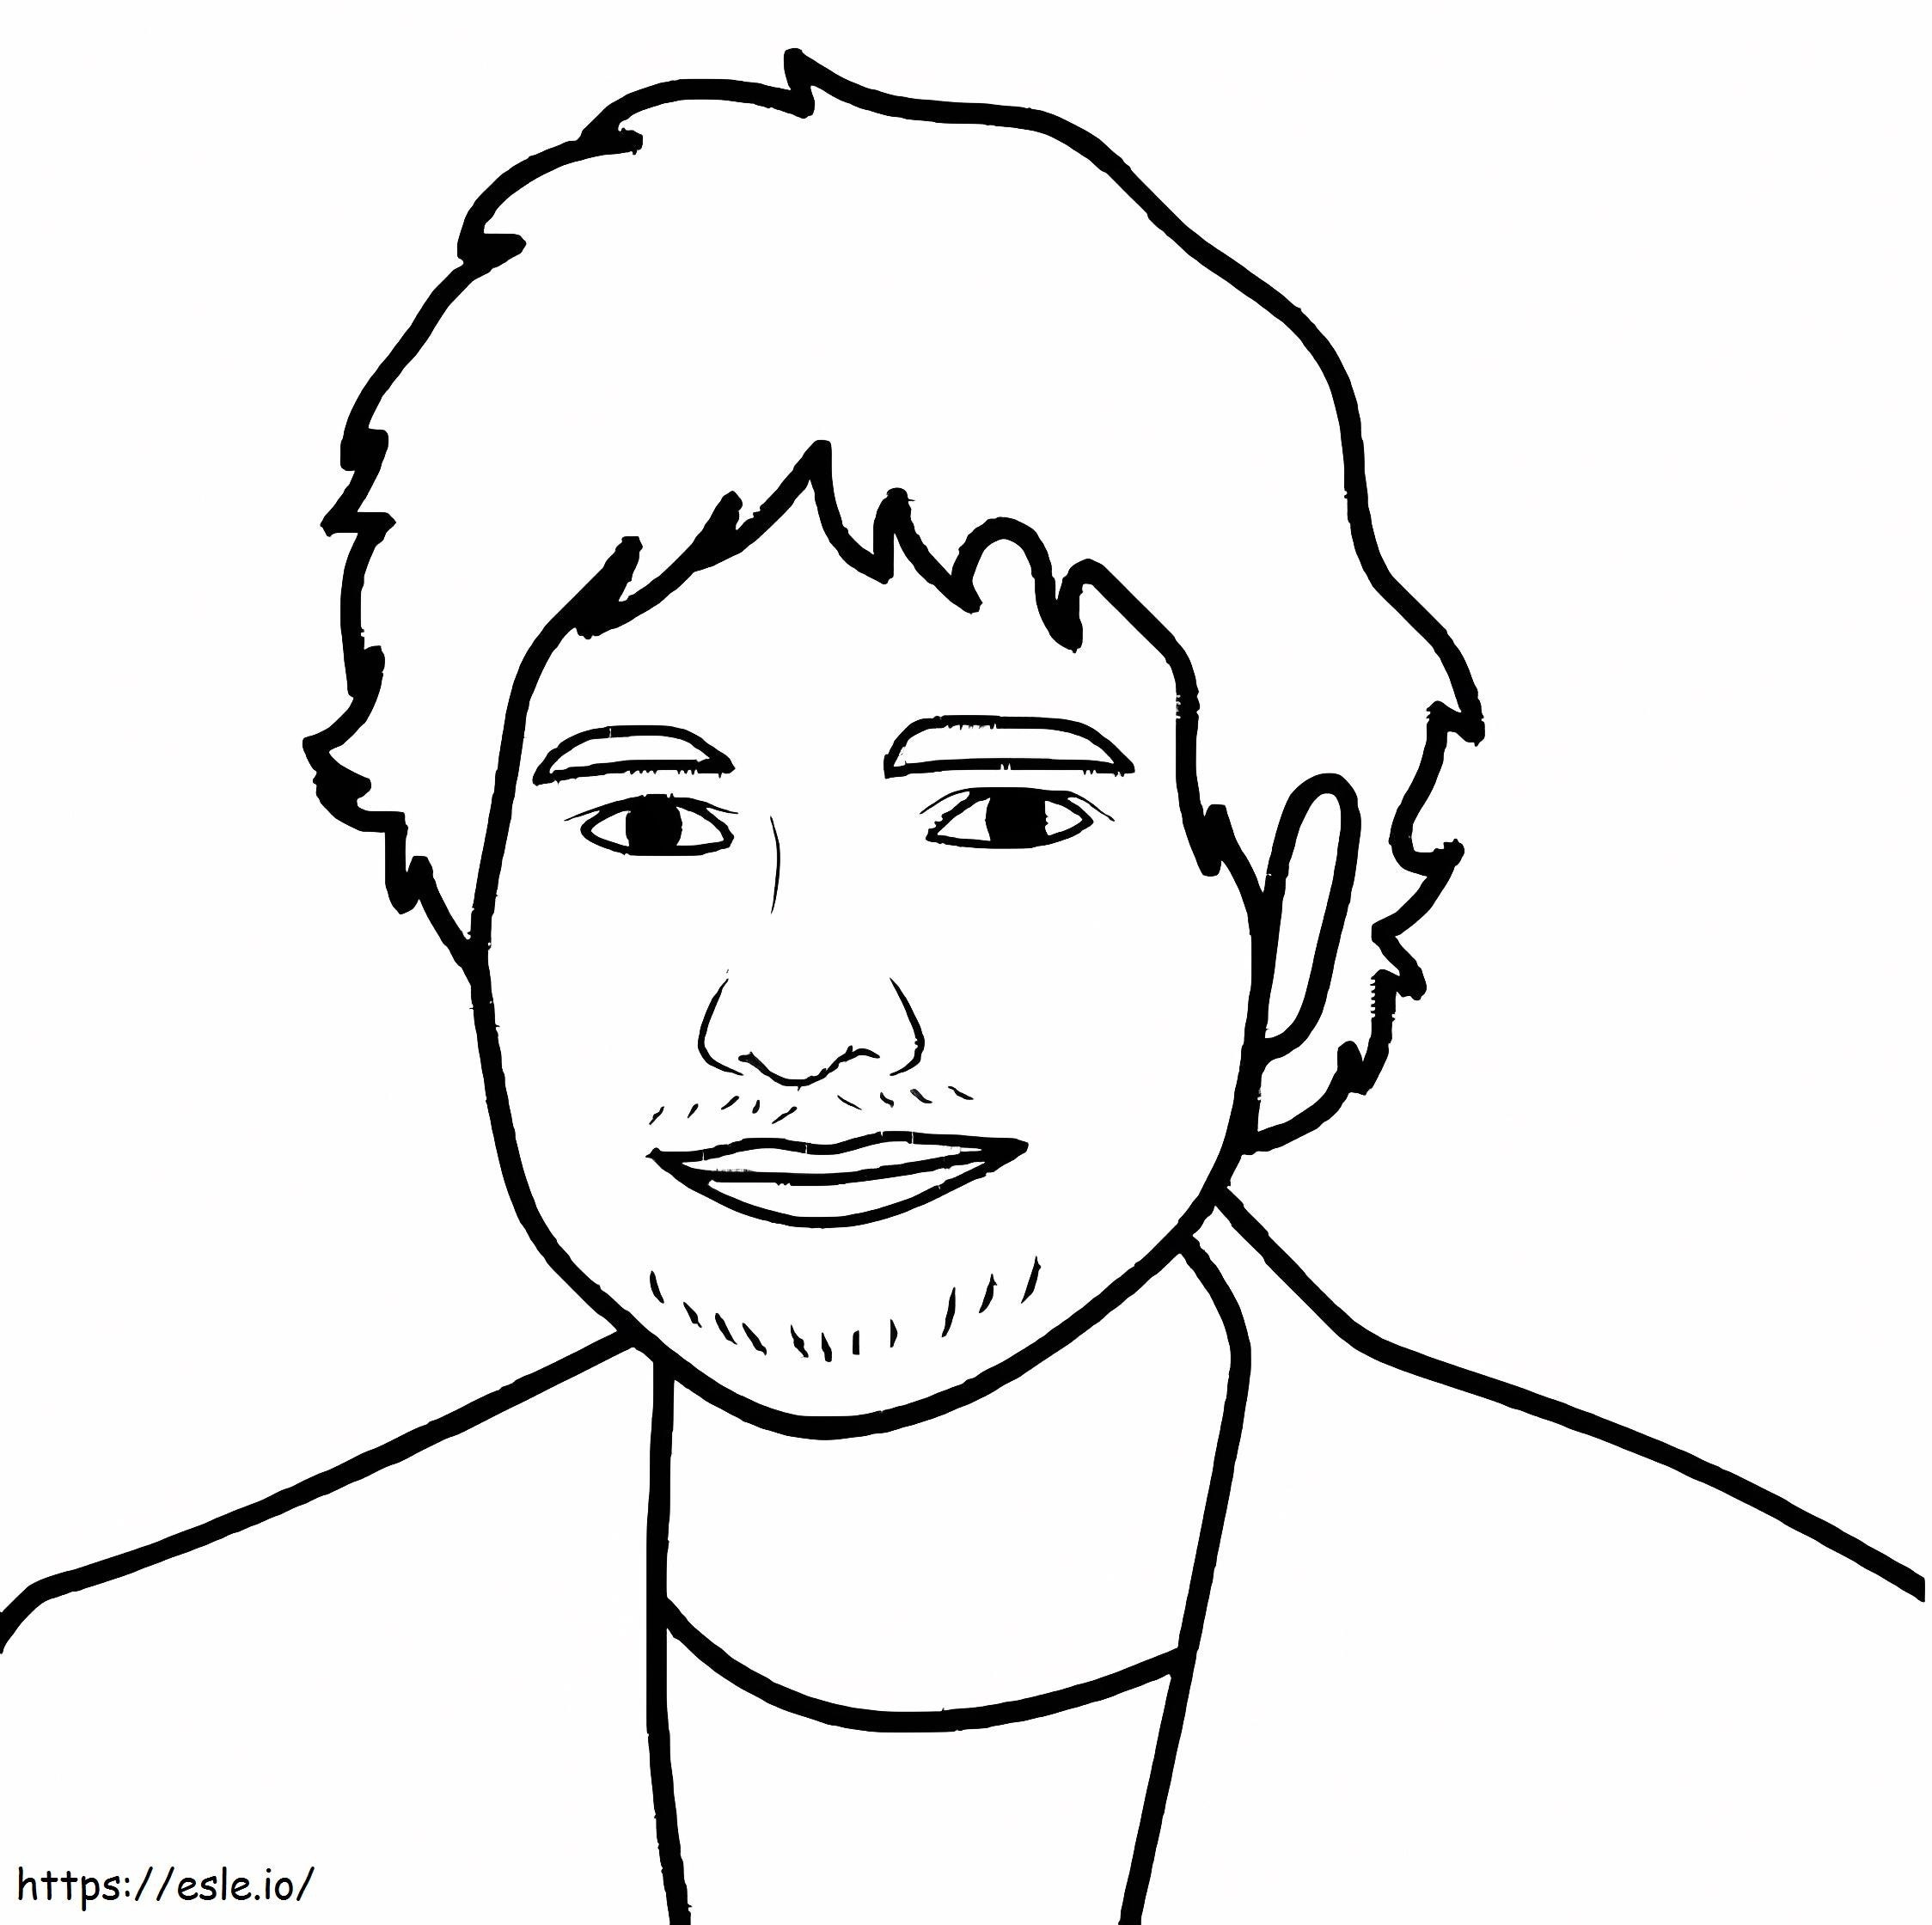 Coloriage Chanteur Ed Sheeran à imprimer dessin